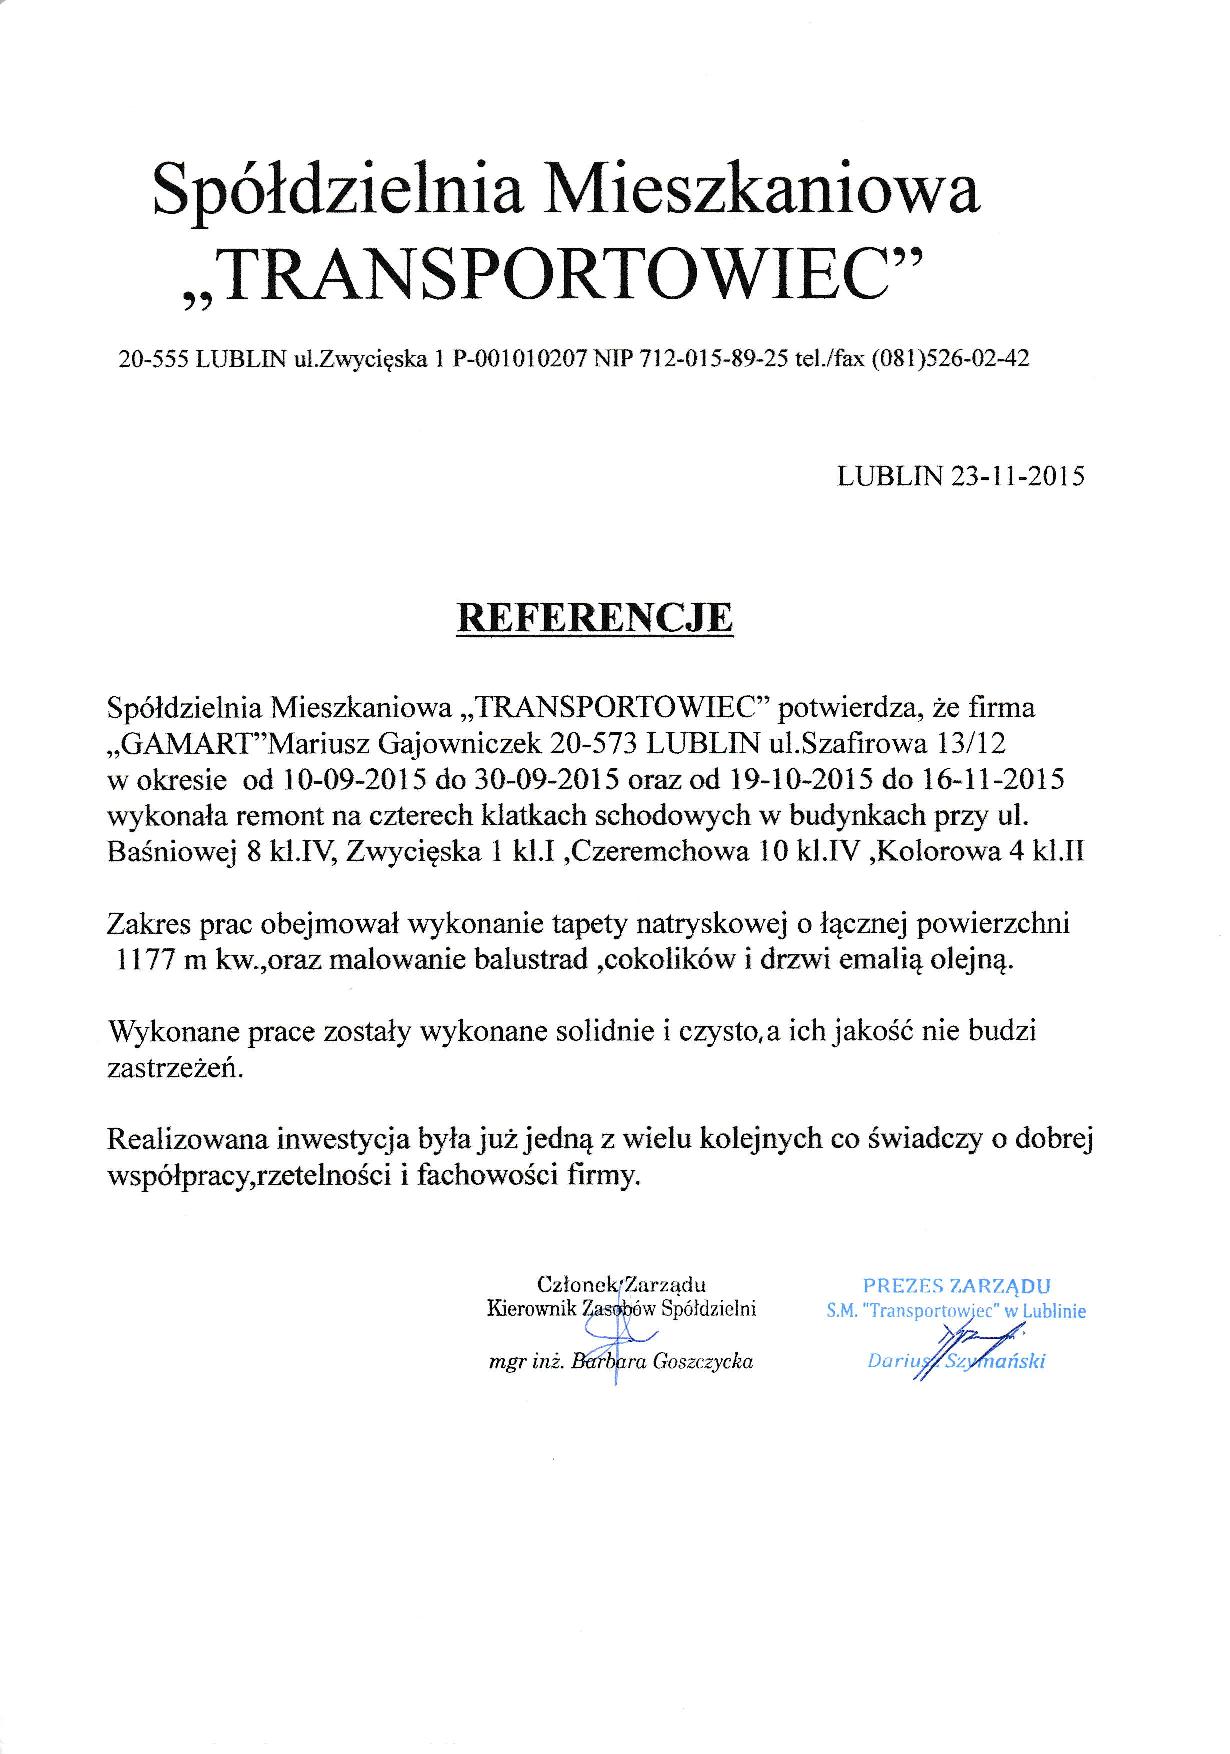 referencje Transportowiec 2015-page-001